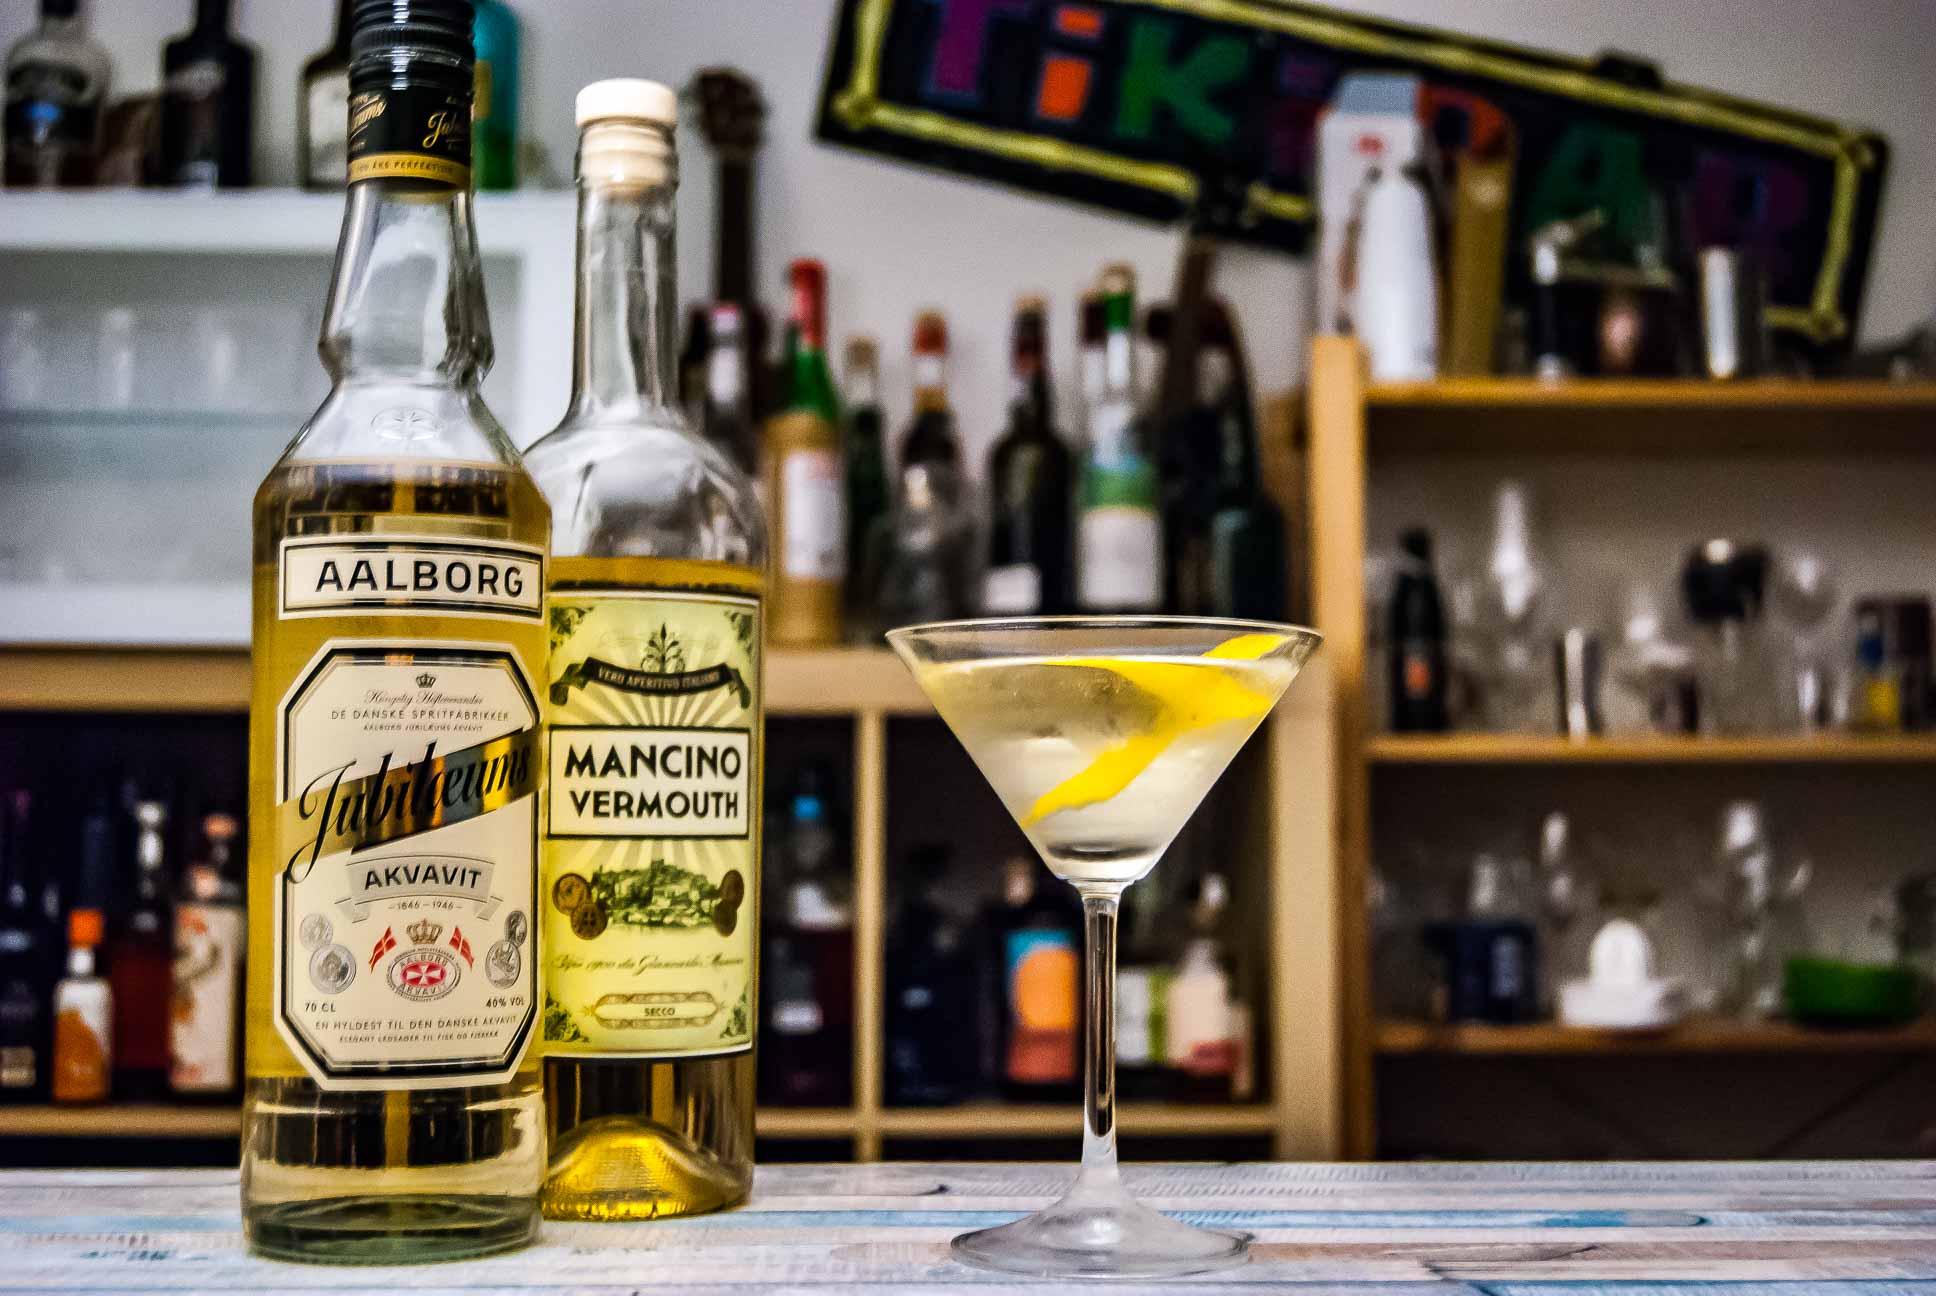 Aalborg Jubiläums Akvavit im Martini mit Mancino Vermouth Secco. Der Wahnsinn, diese Aquavit Martinis. 